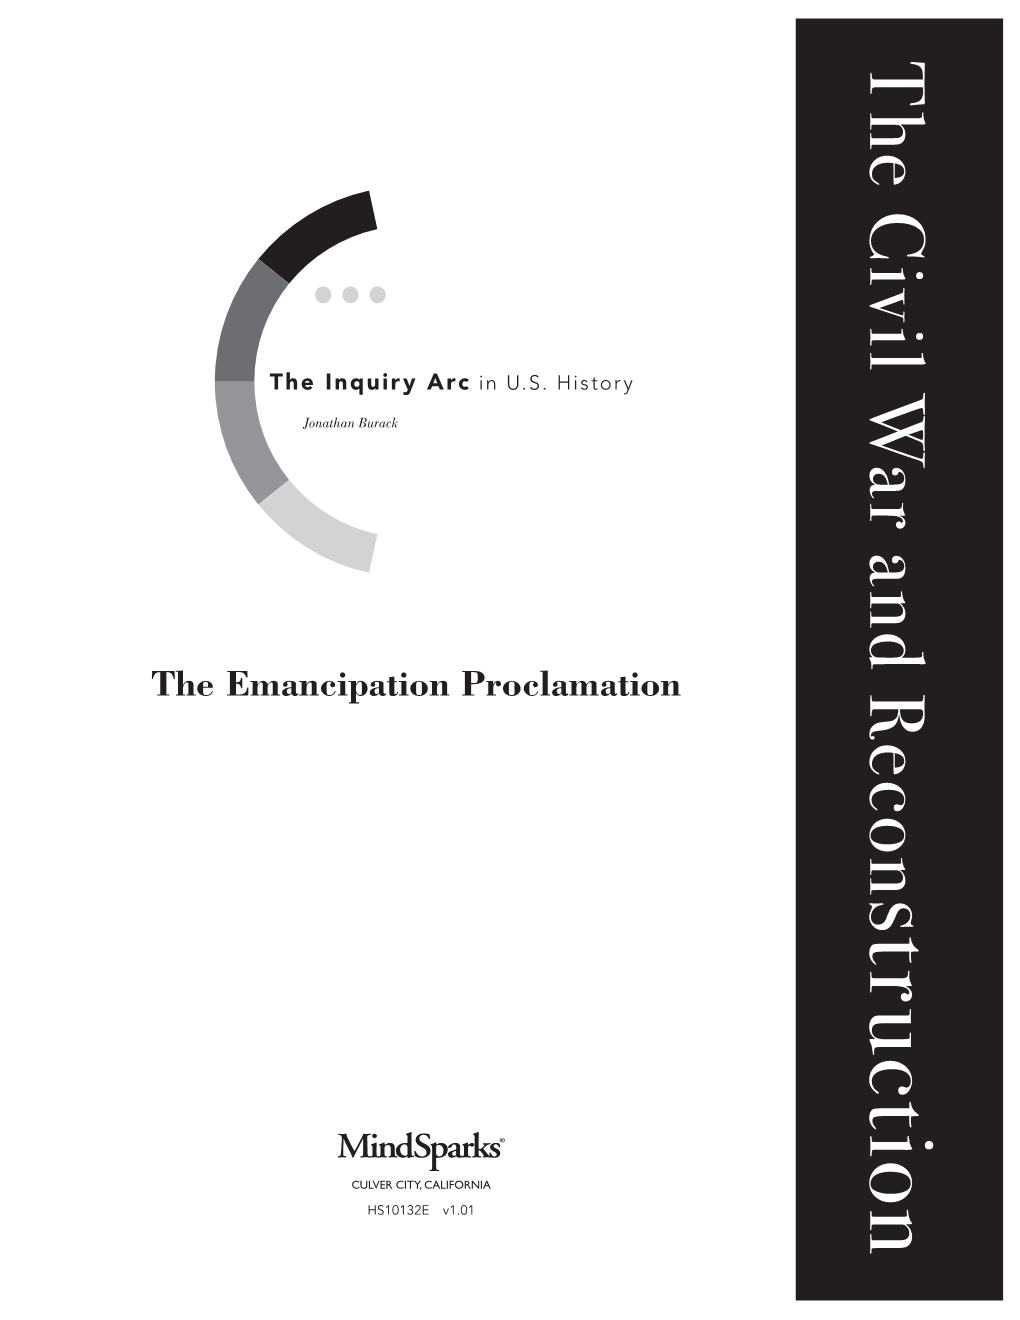 The Emancipation Proclamation Struction